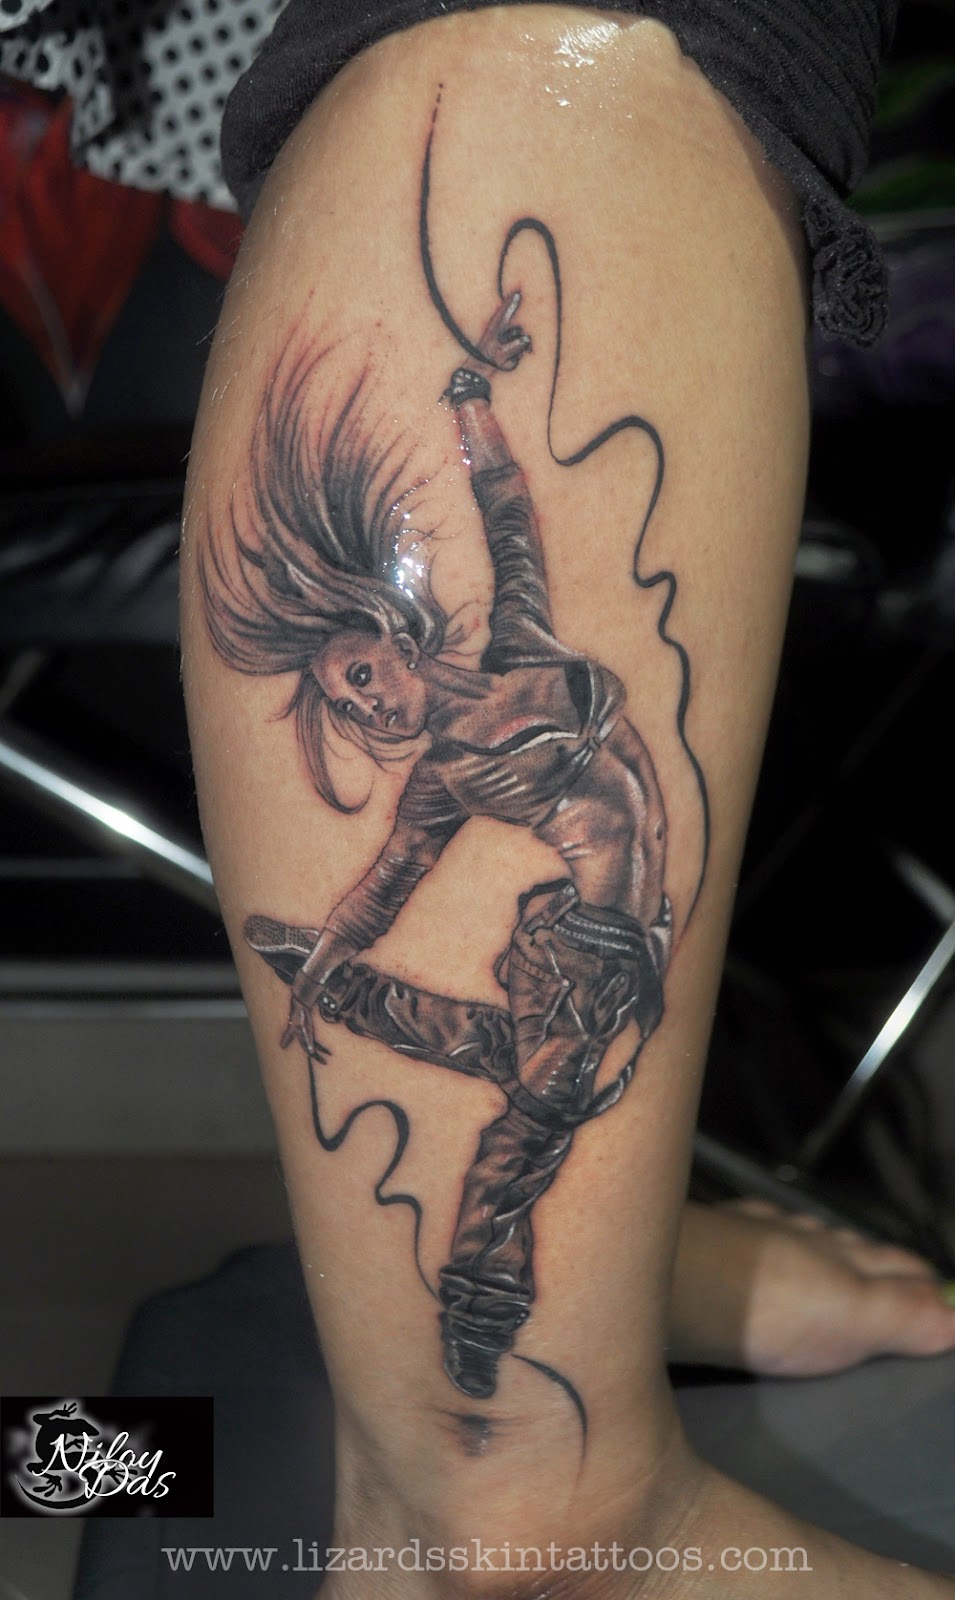 Lizard's Skin Tattoos: Dancing Girl Tattoo by artist Niloy Das